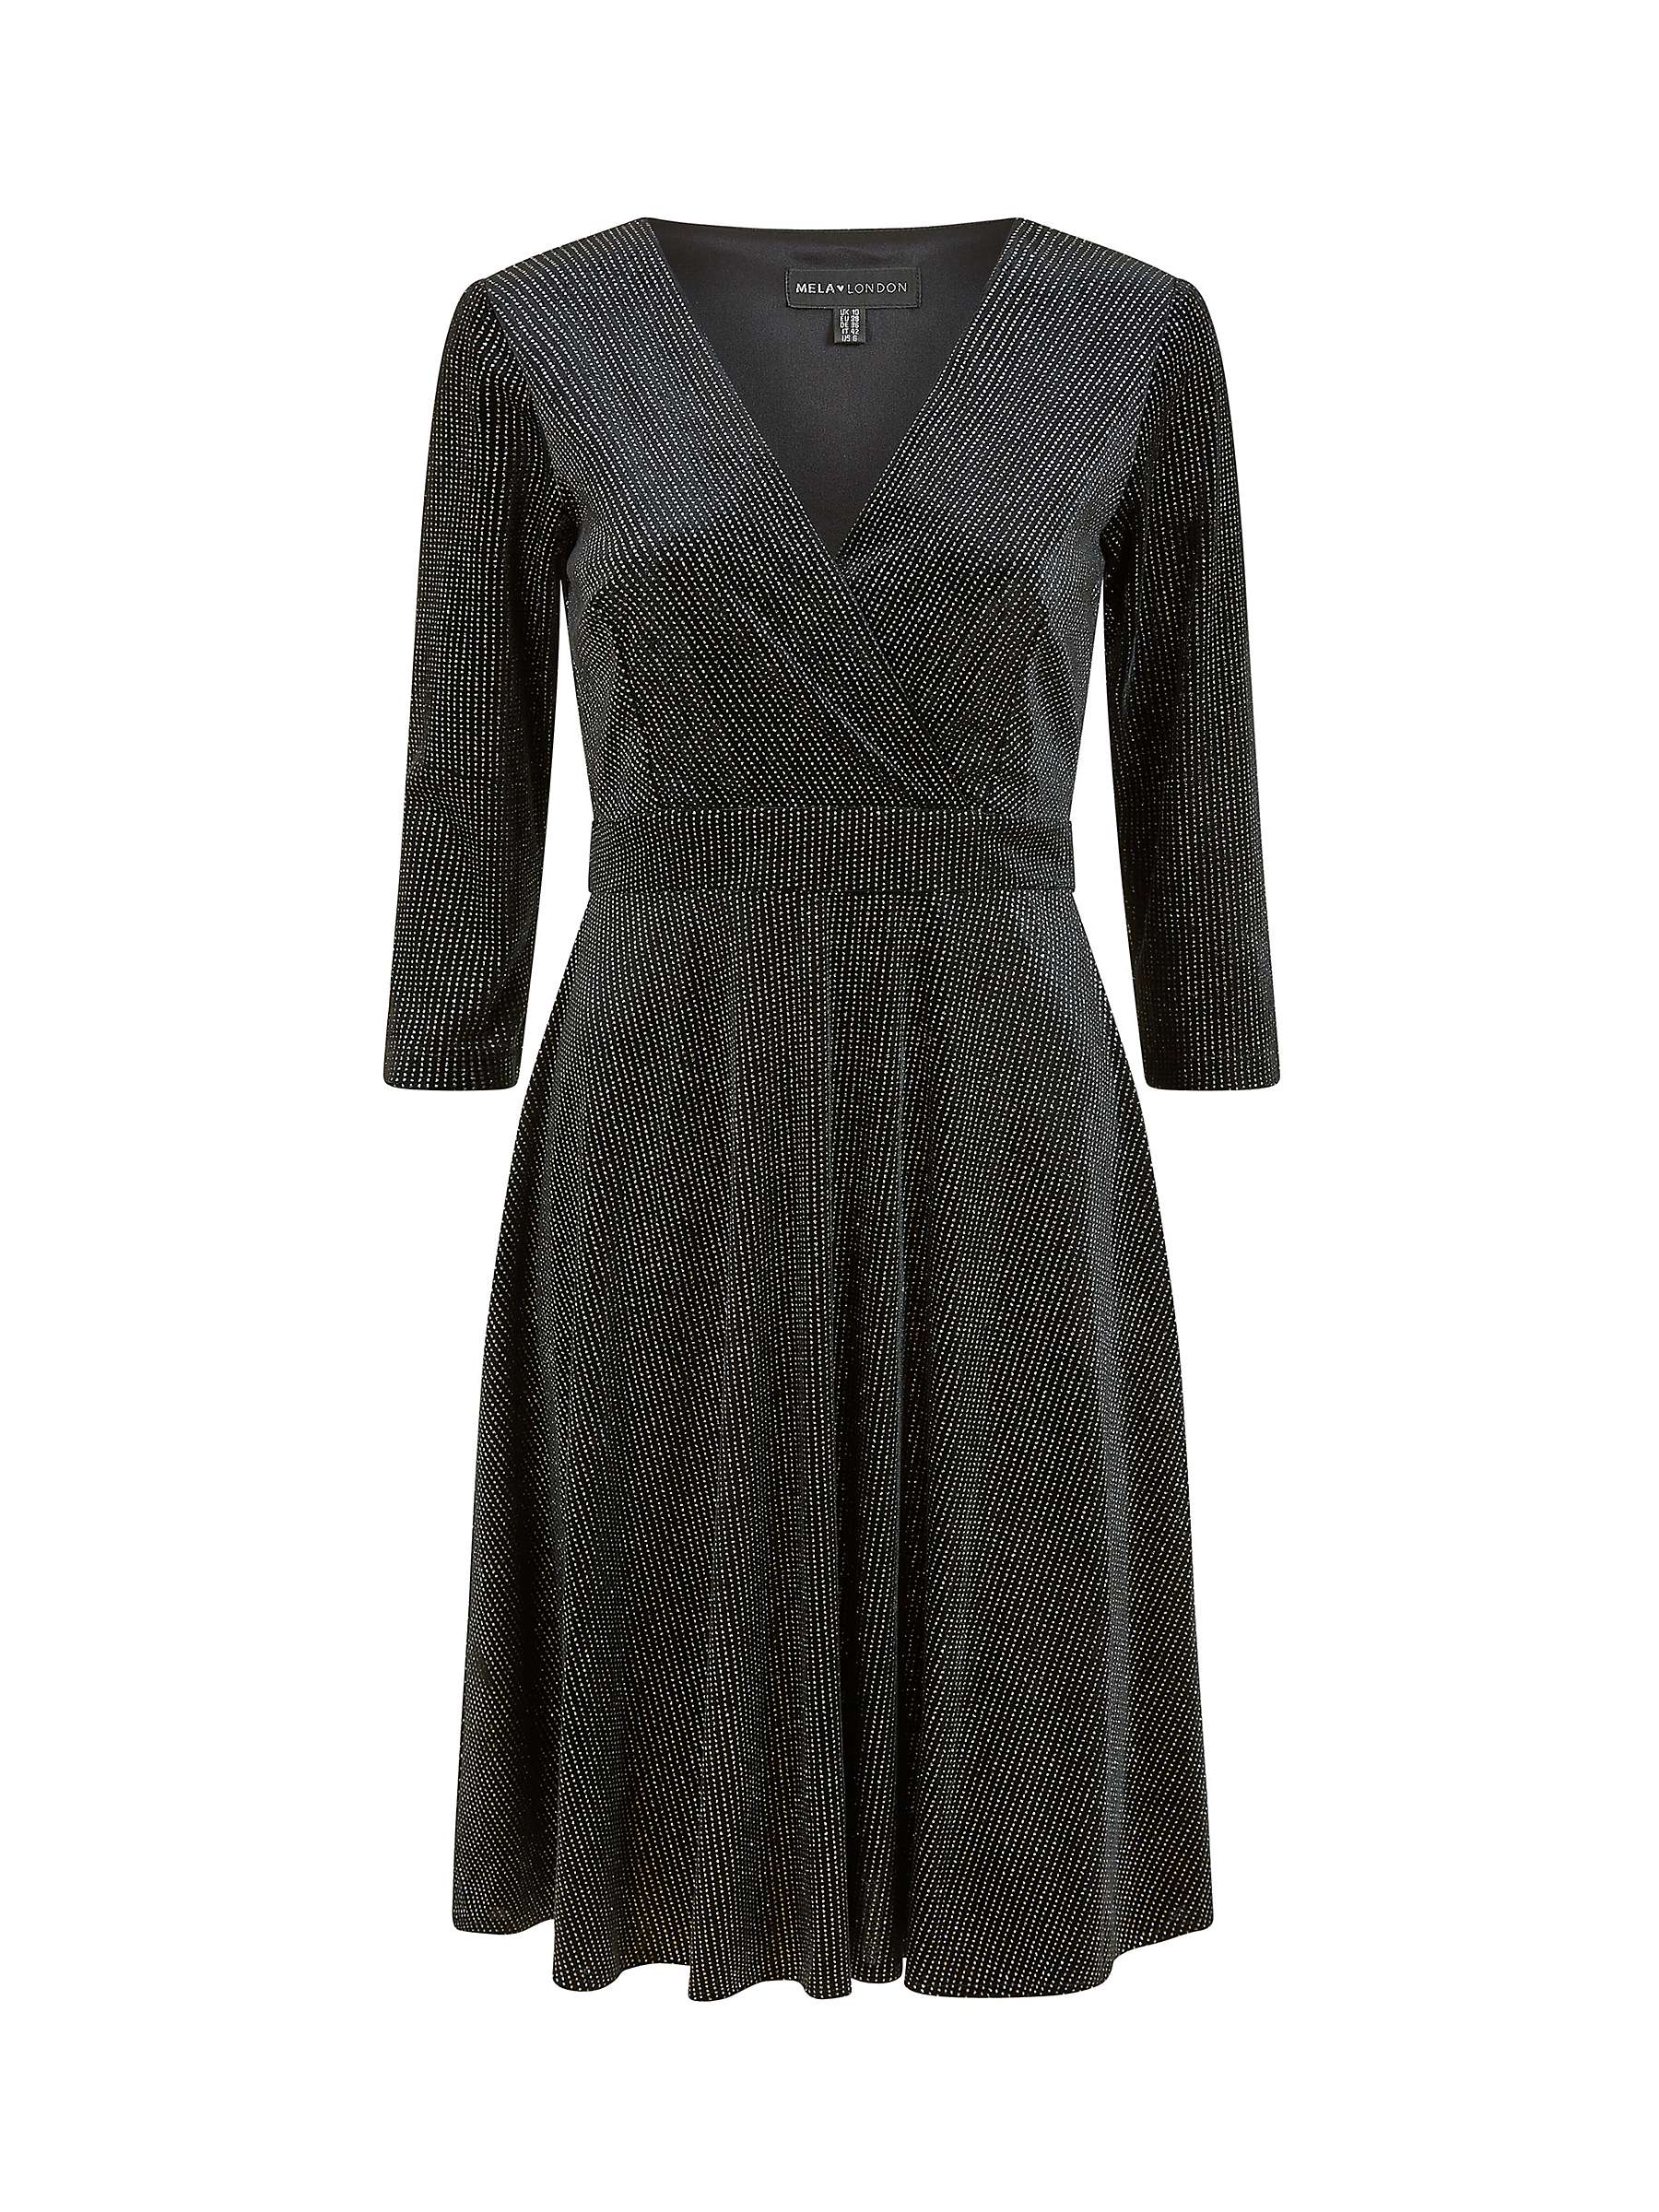 Buy Yumi Mela London Sparkle Long Sleeve Skater Dress, Black Online at johnlewis.com